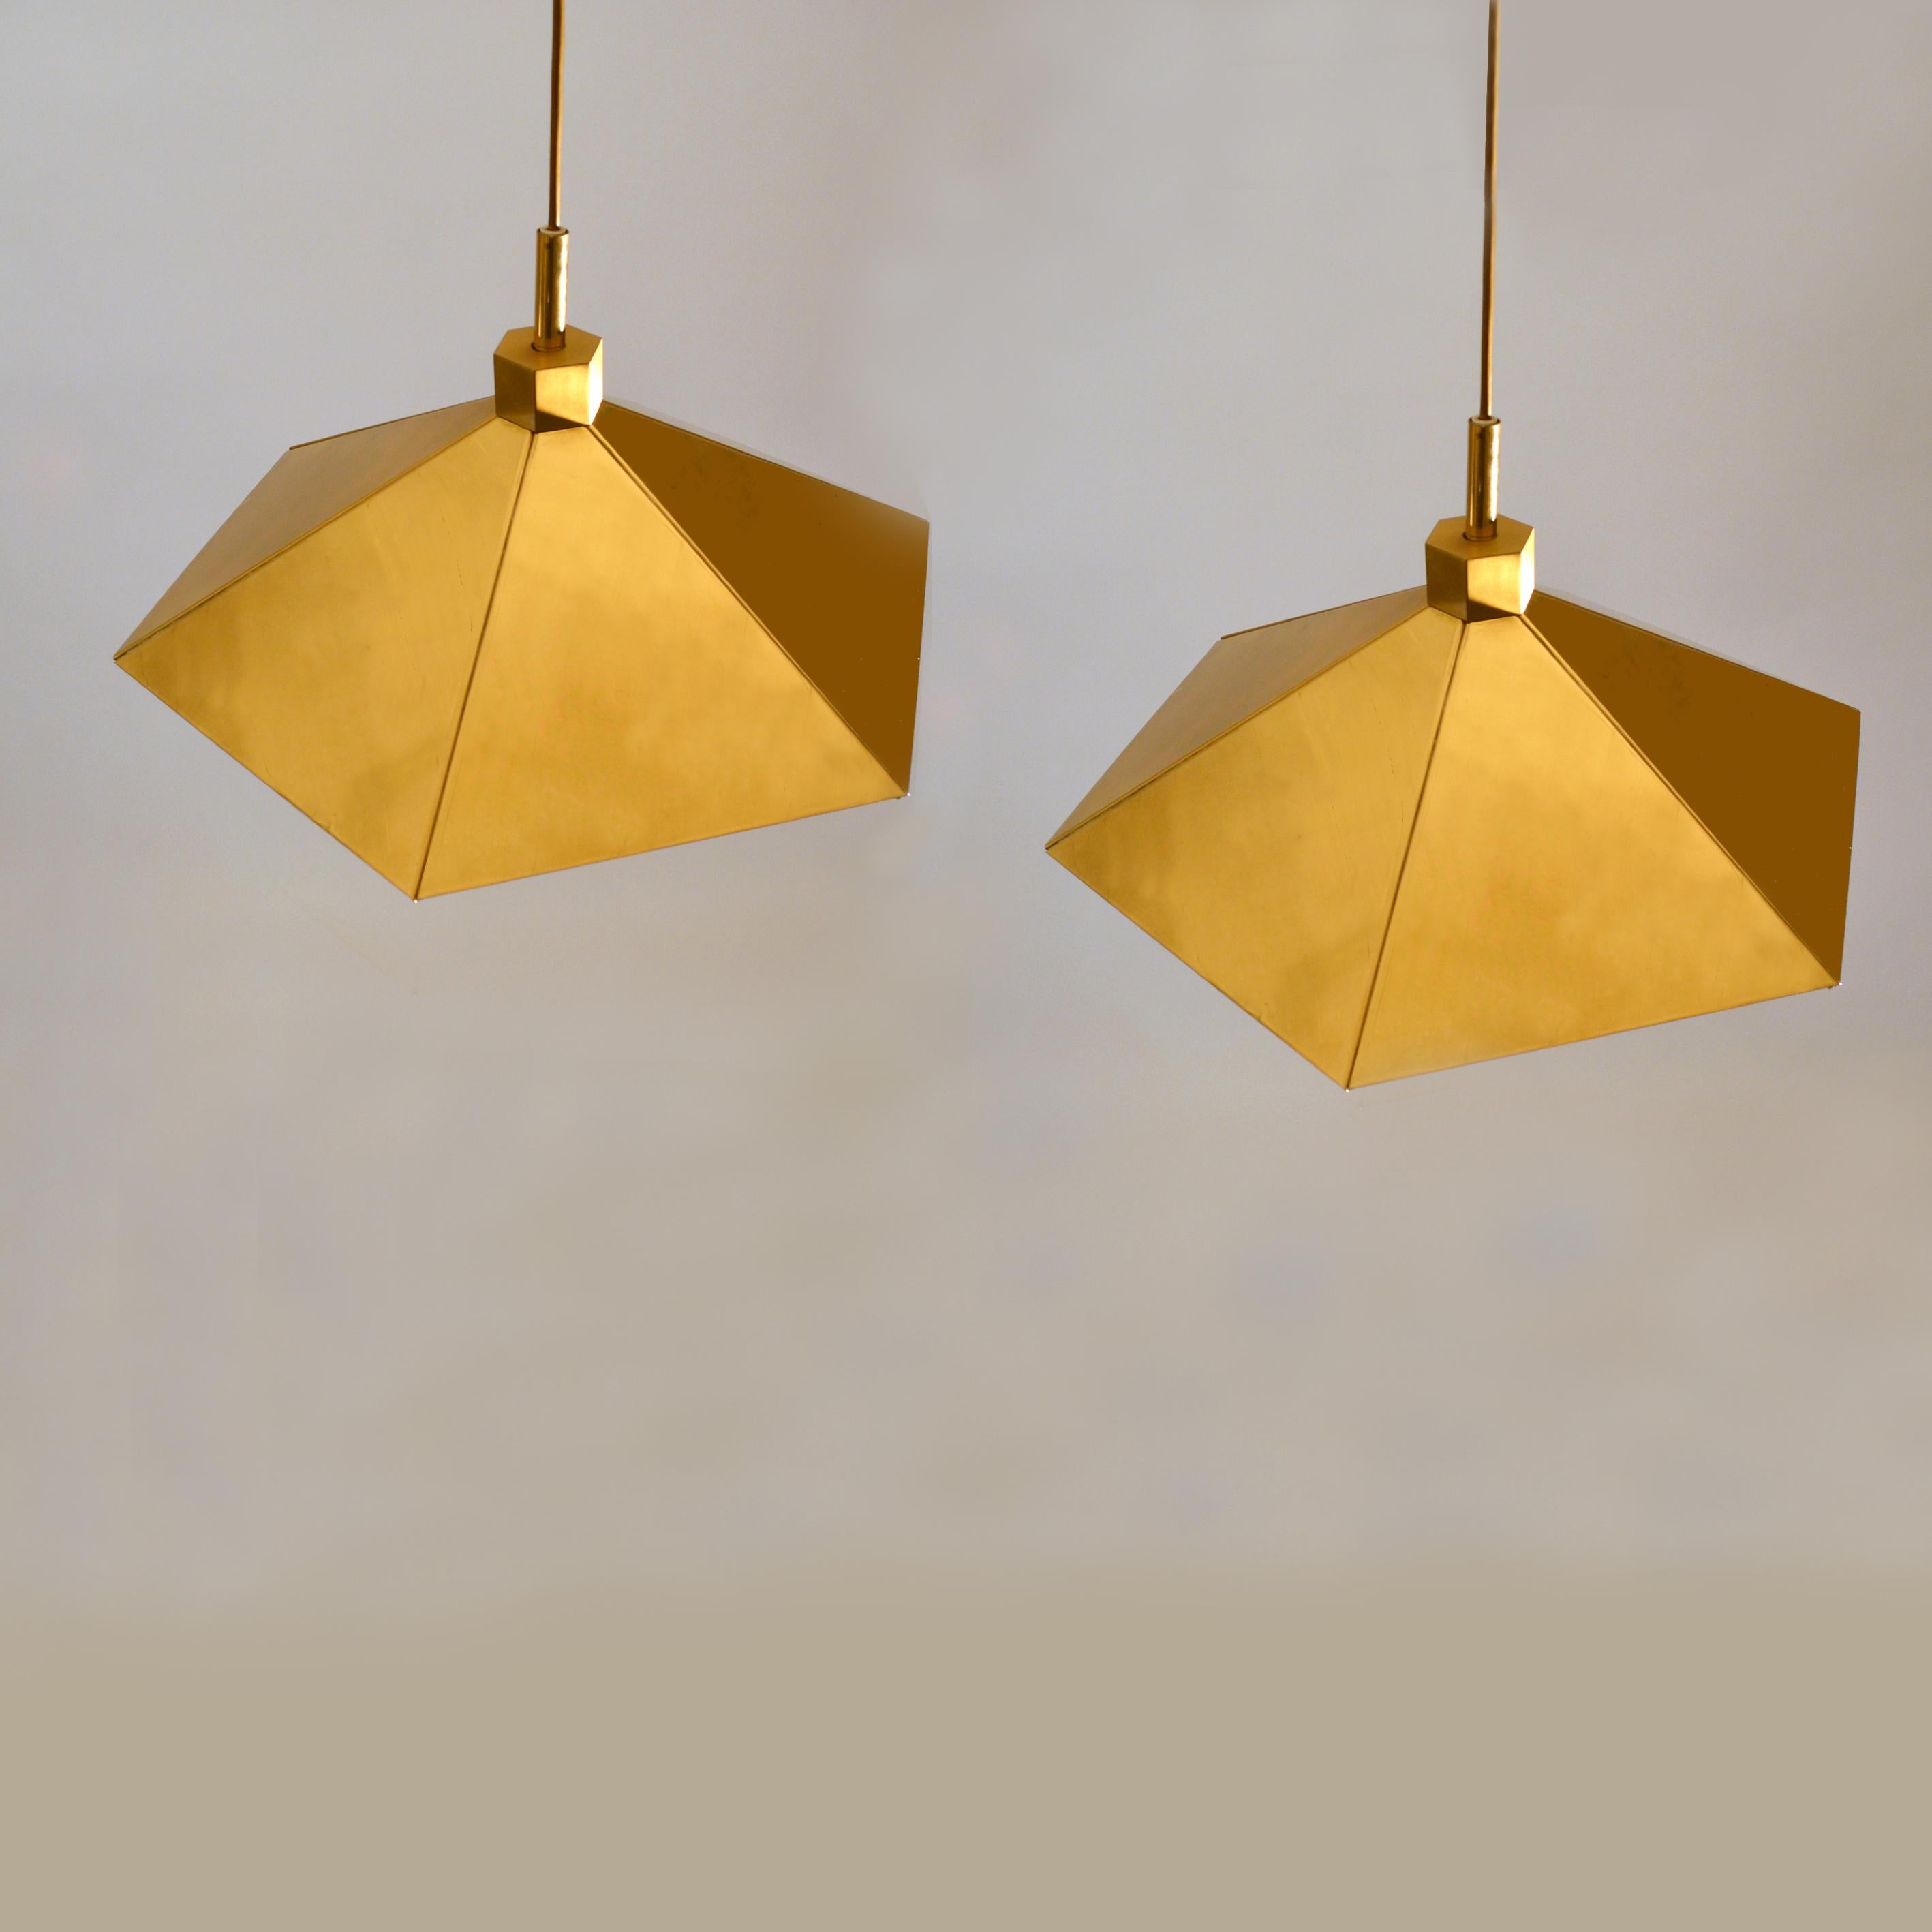 Belgian Pair of Brass Pendant Lamps in Umbrella Shape, Belgium 1970s For Sale